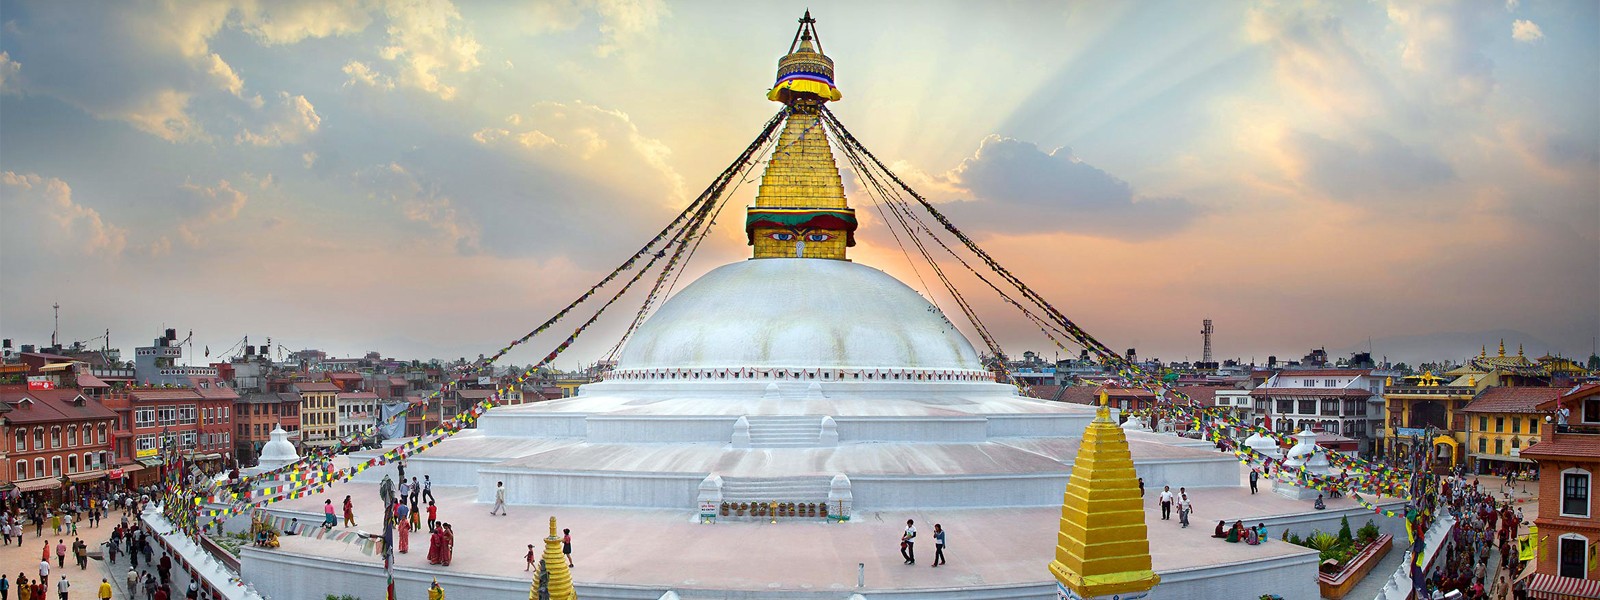 Special Excursion Nepal Tour